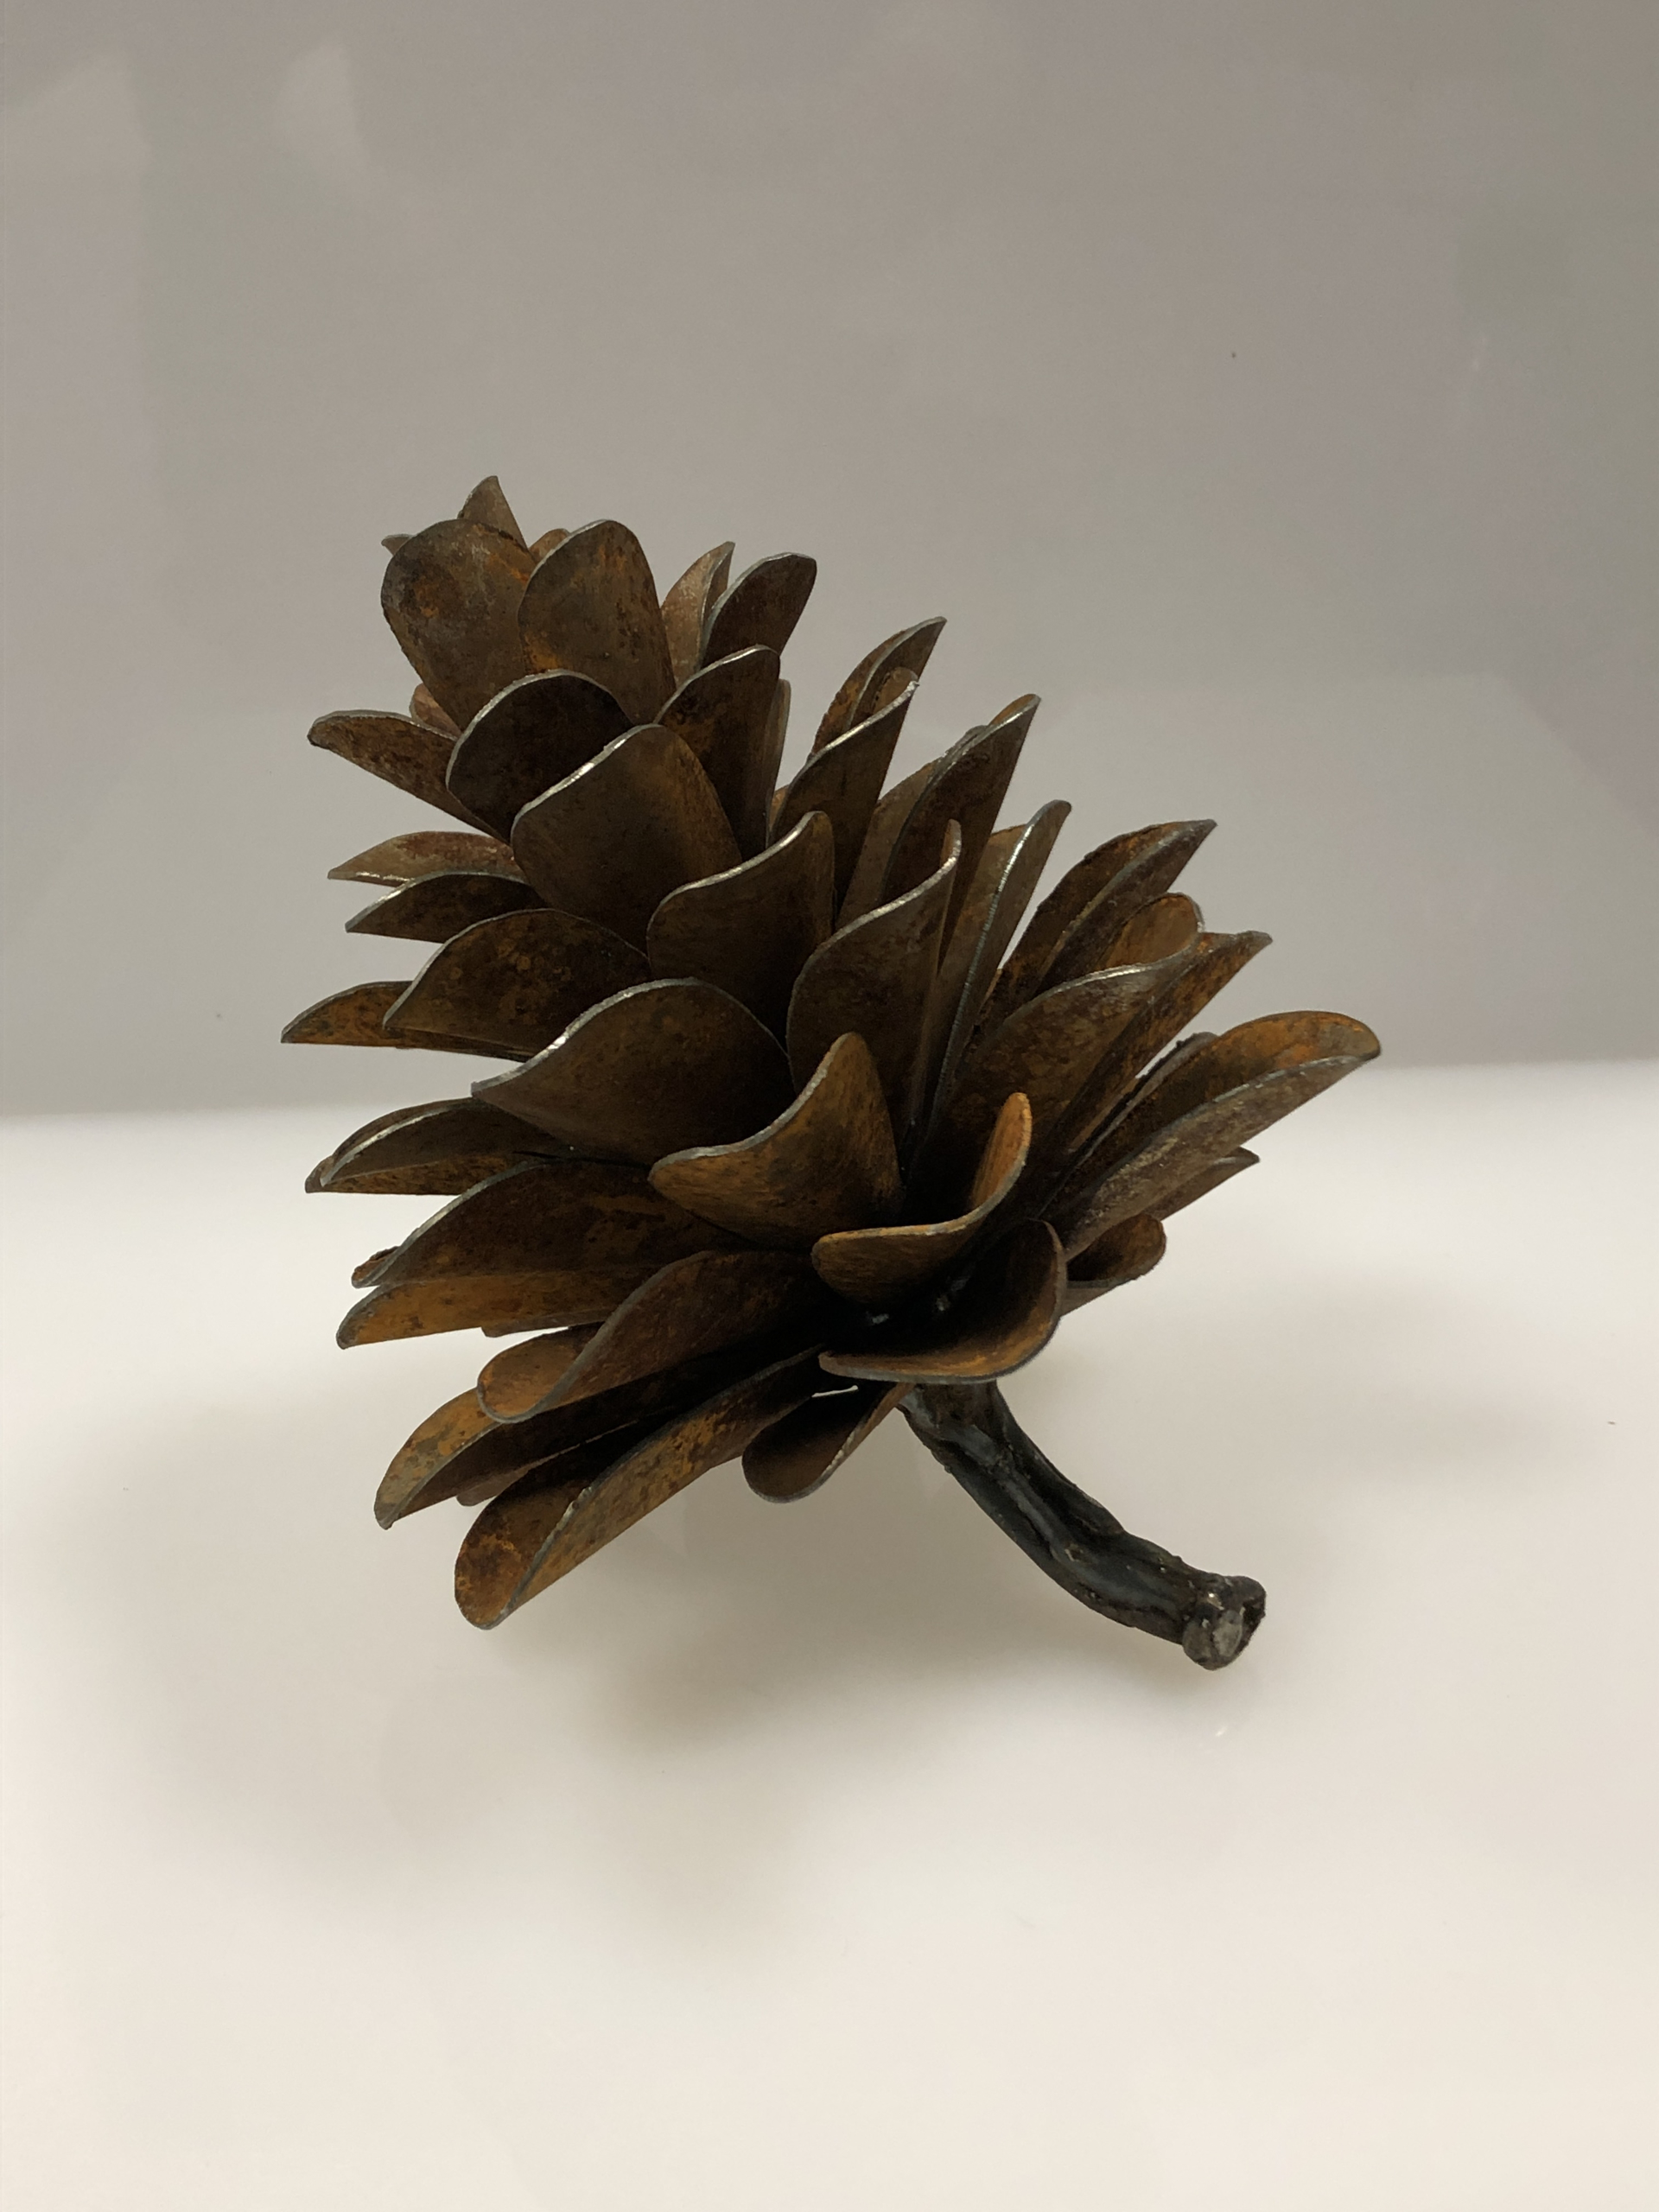 Pine Cone #19-737 by Floyd Elzinga